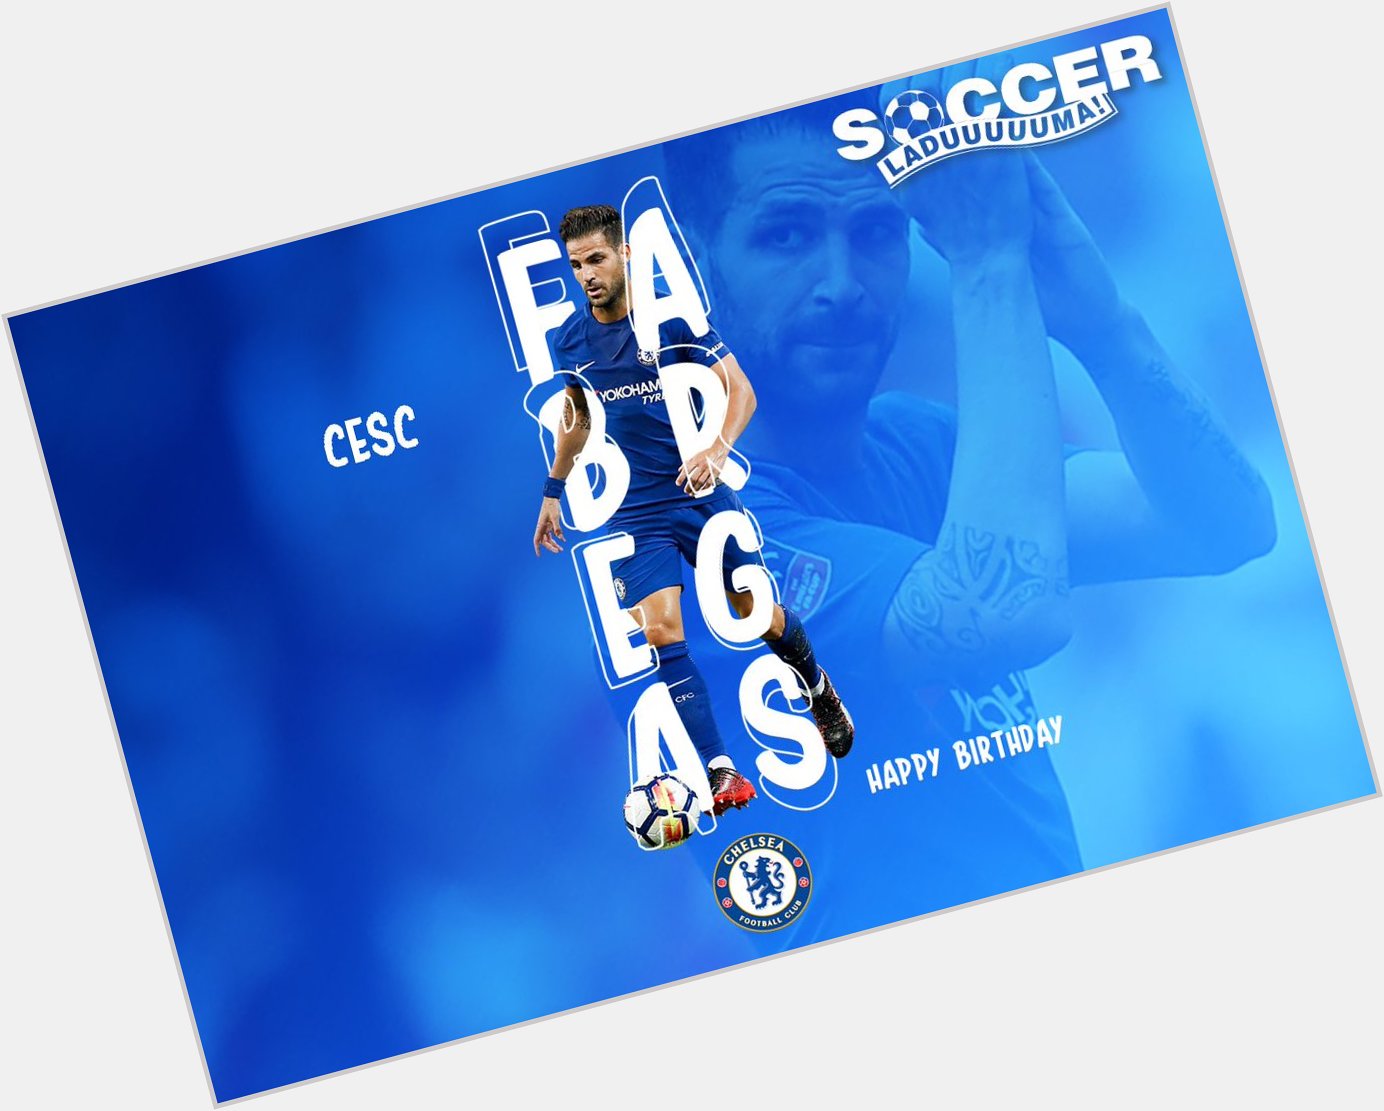 Join us as we wish Chelsea midfielder, Cesc Fàbregas, a Happy 31st Birthday! 